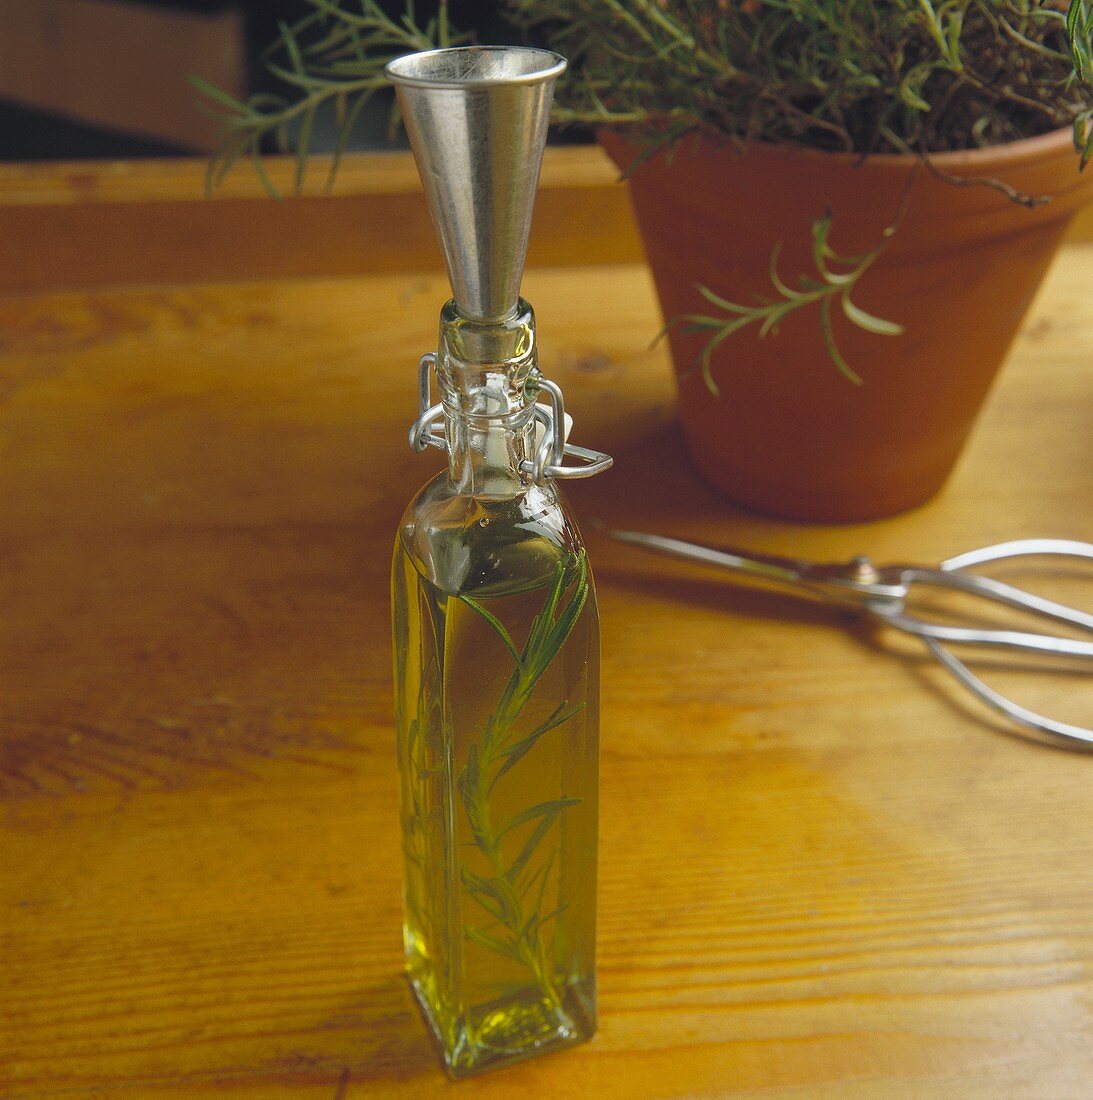 A Bottle of Rosemary Olive Oil